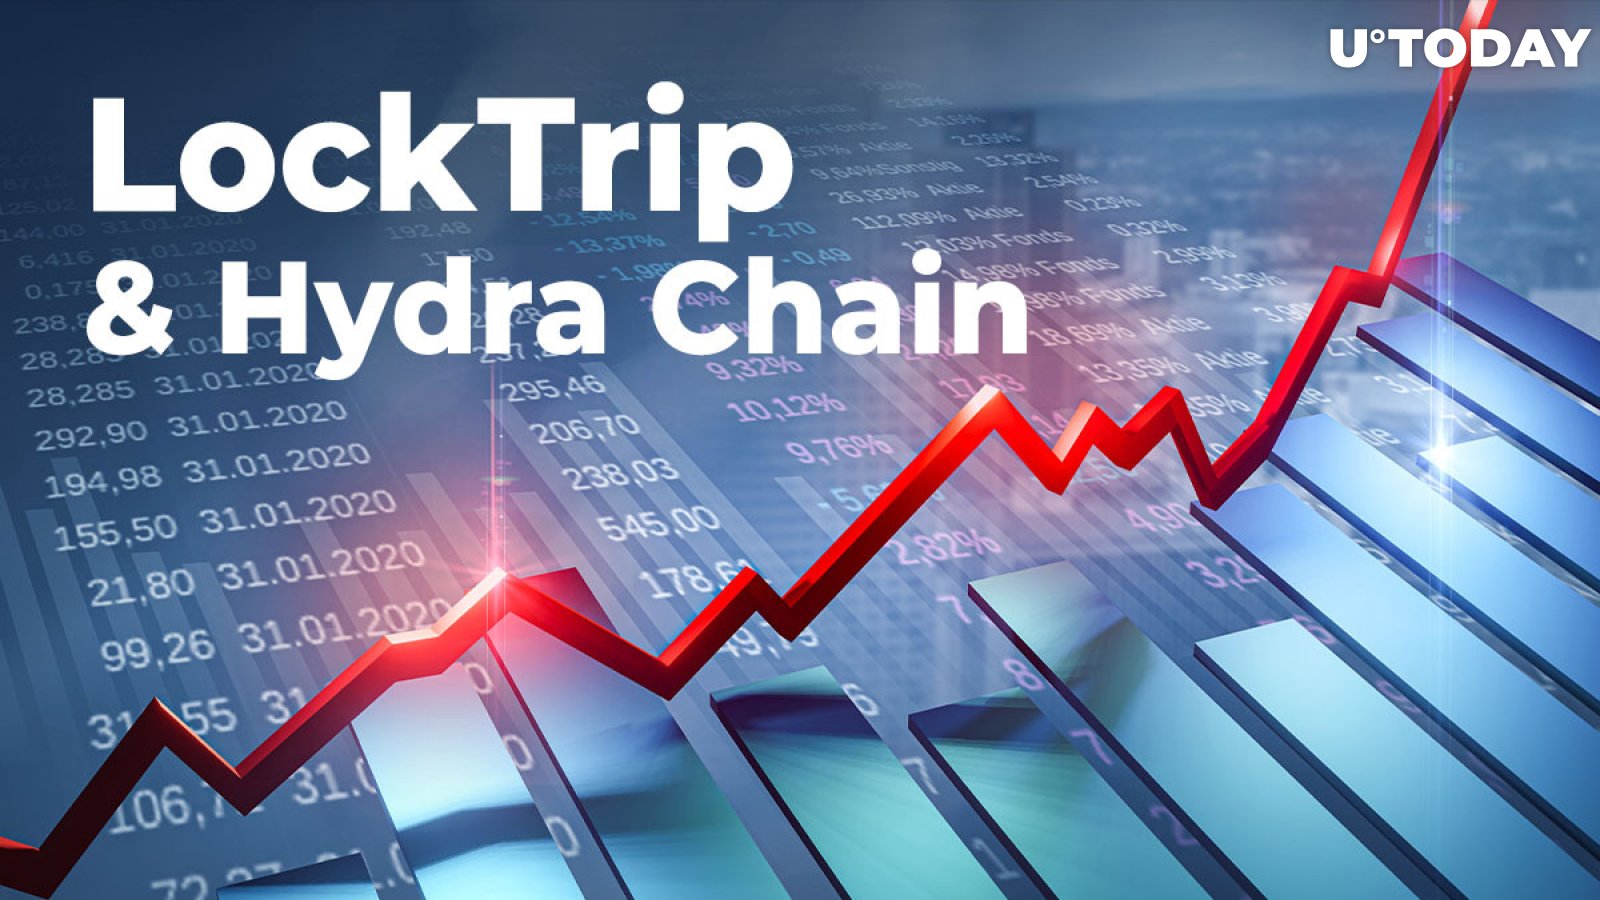 Travel Giant Webjet Secures Majority Stake in LockTrip & Hydra Chain